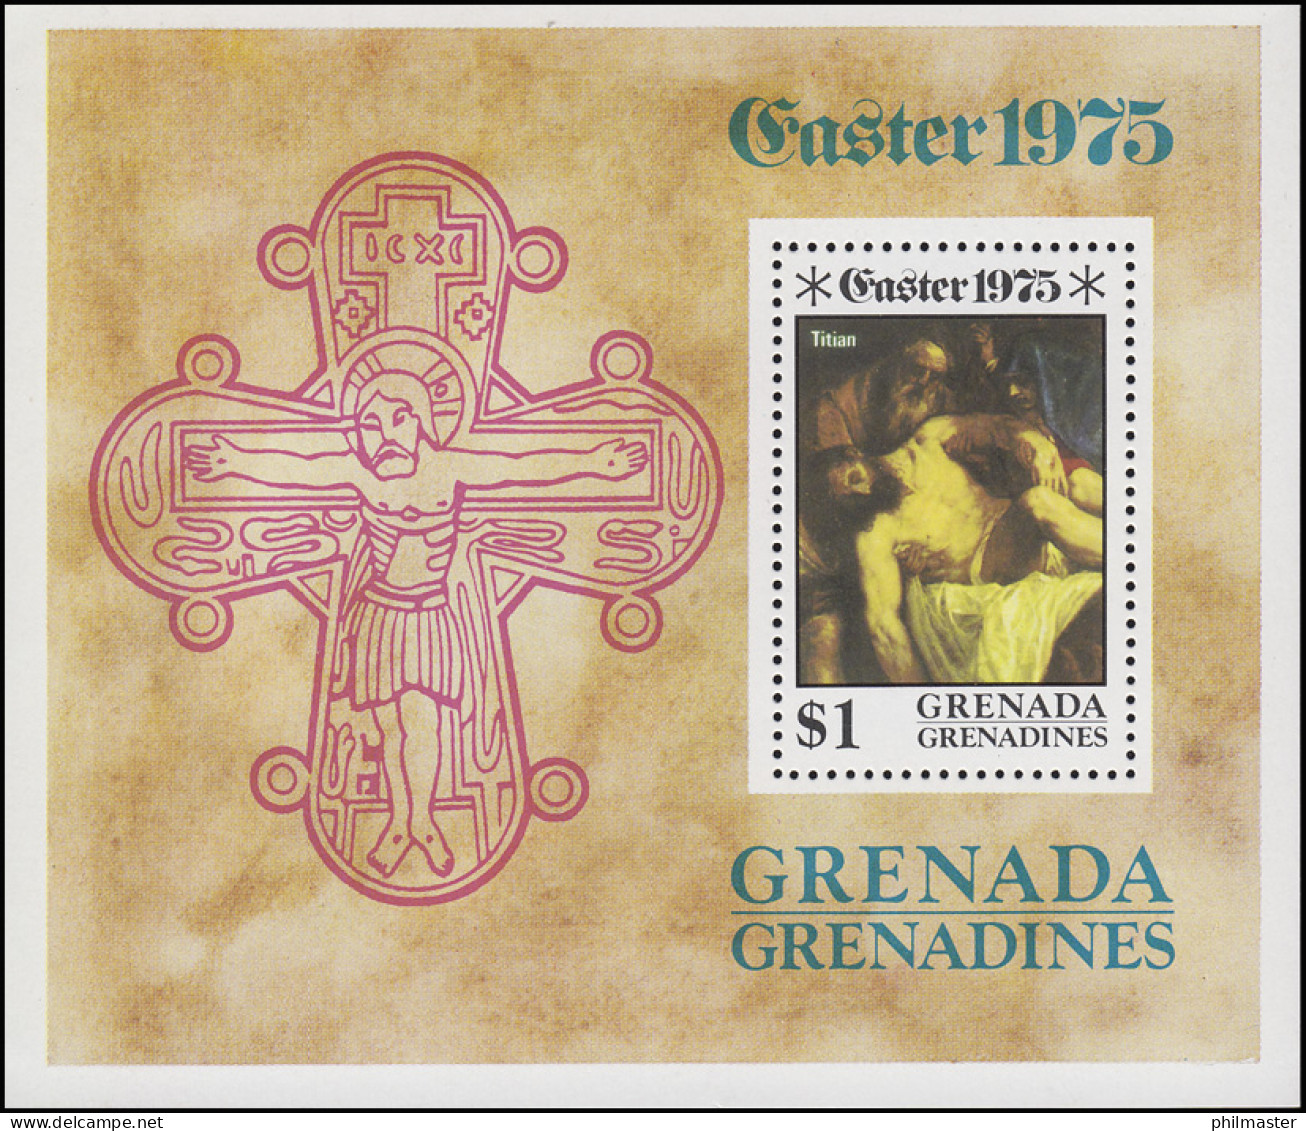 Grenadines: Ostern Easter - Die Kreuzigung Christi 1975, Block ** - Cristianismo